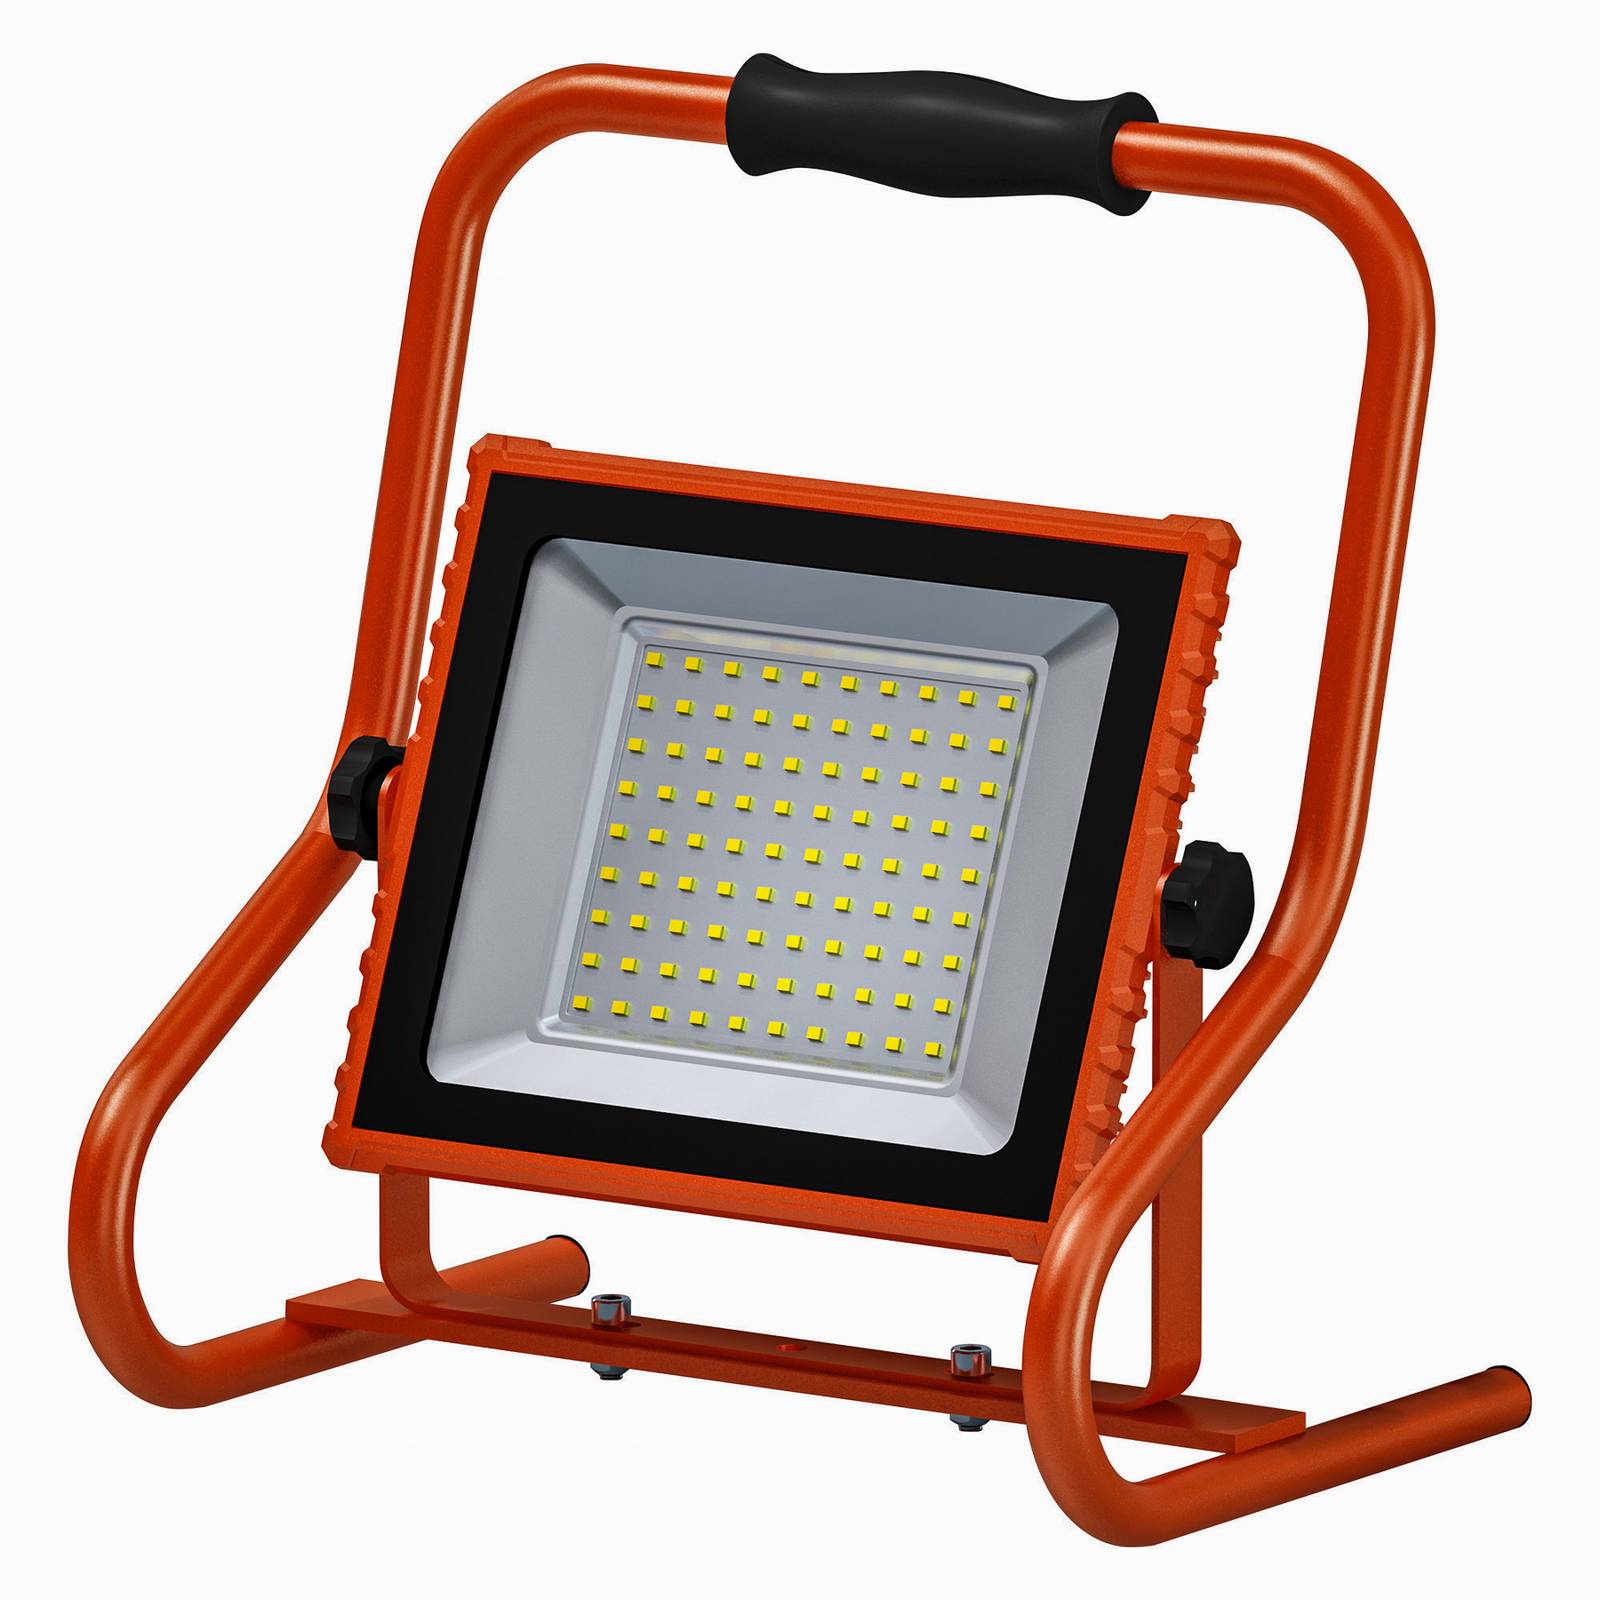 LEDVANCE Worklight Battery LED-Arbeitslampe 30 W günstig online kaufen